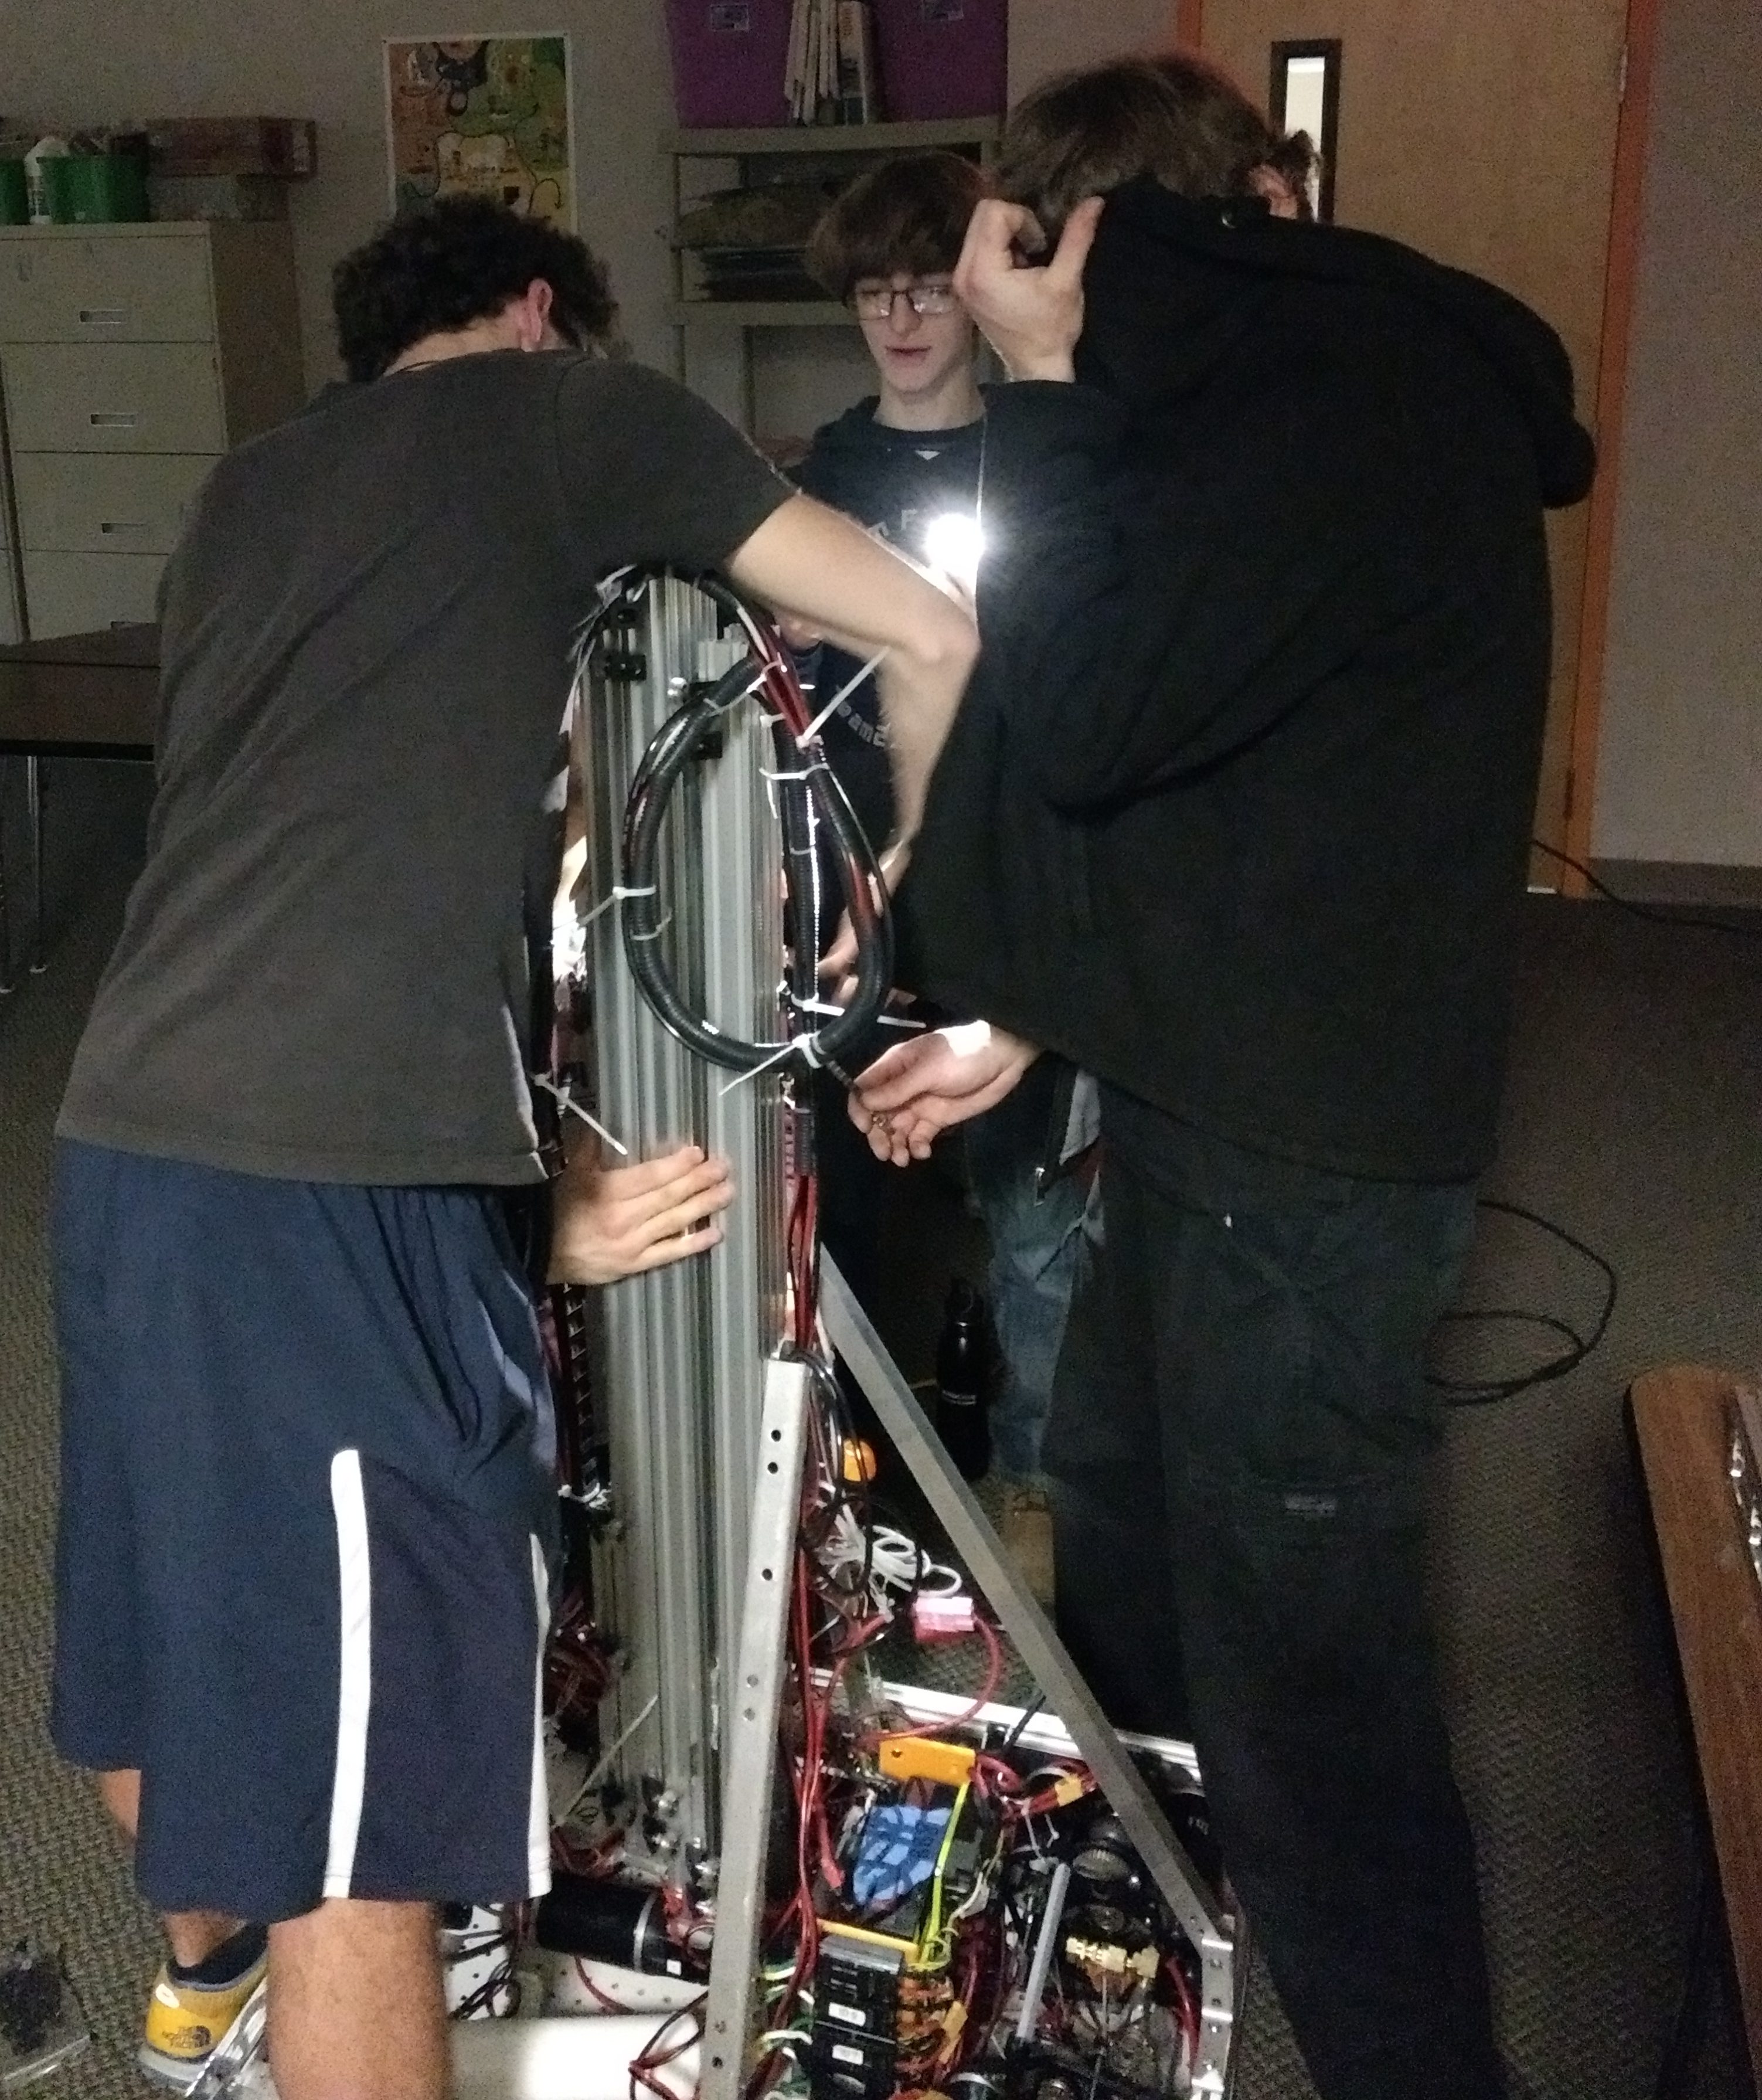 Assembling the Bot in the dark